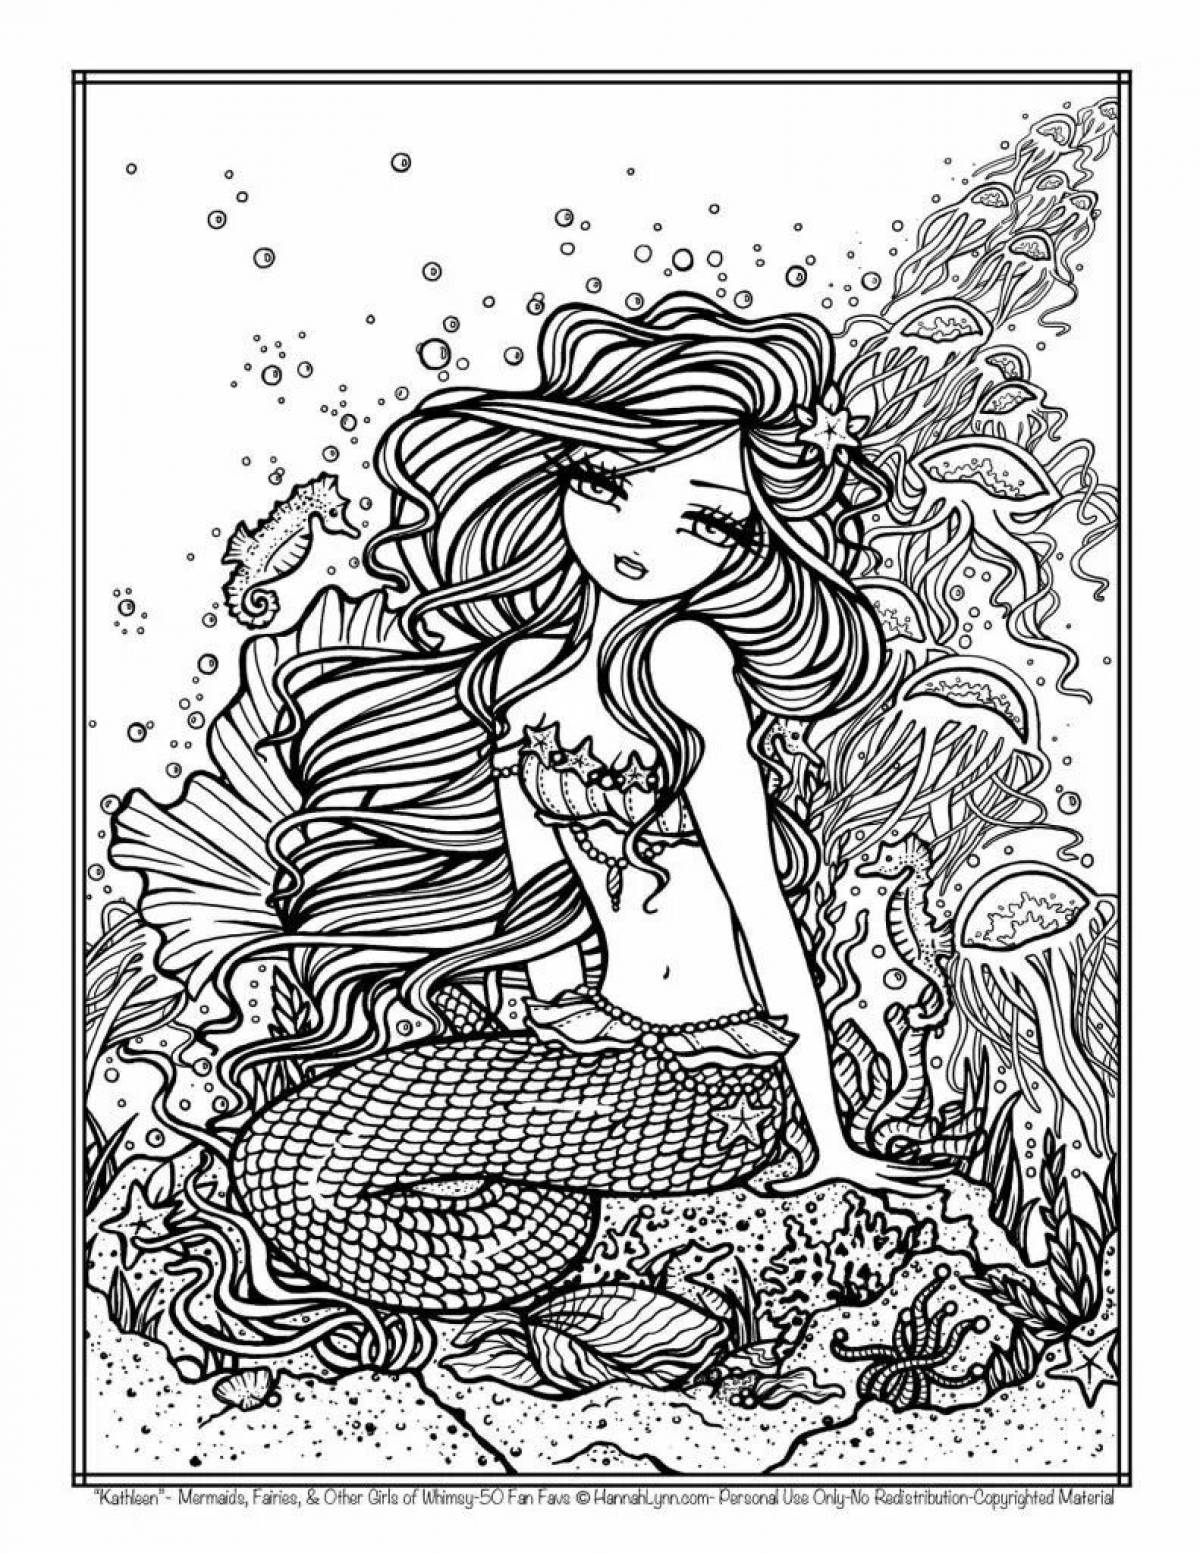 Complex mermaid #8